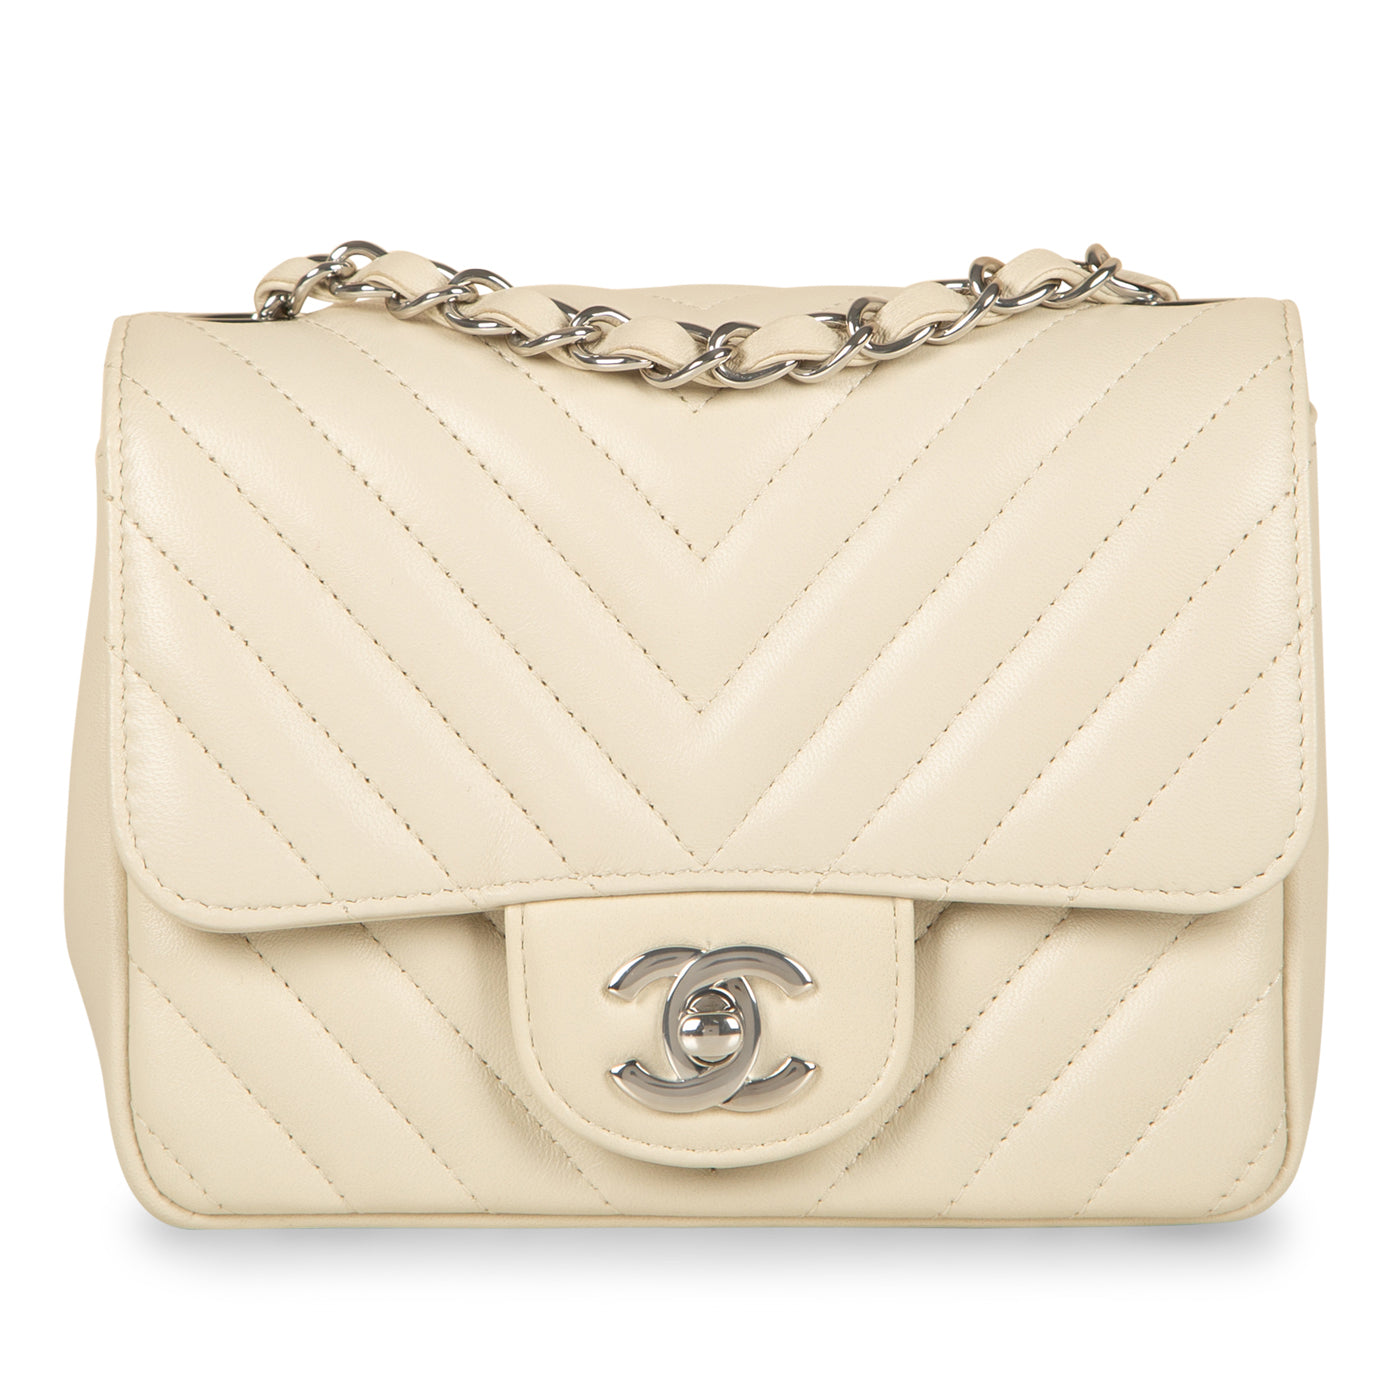 Chanel - Classic Flap Bag - Mini Square - Ivory White Lambskin - Chevron -  SHW - Mint